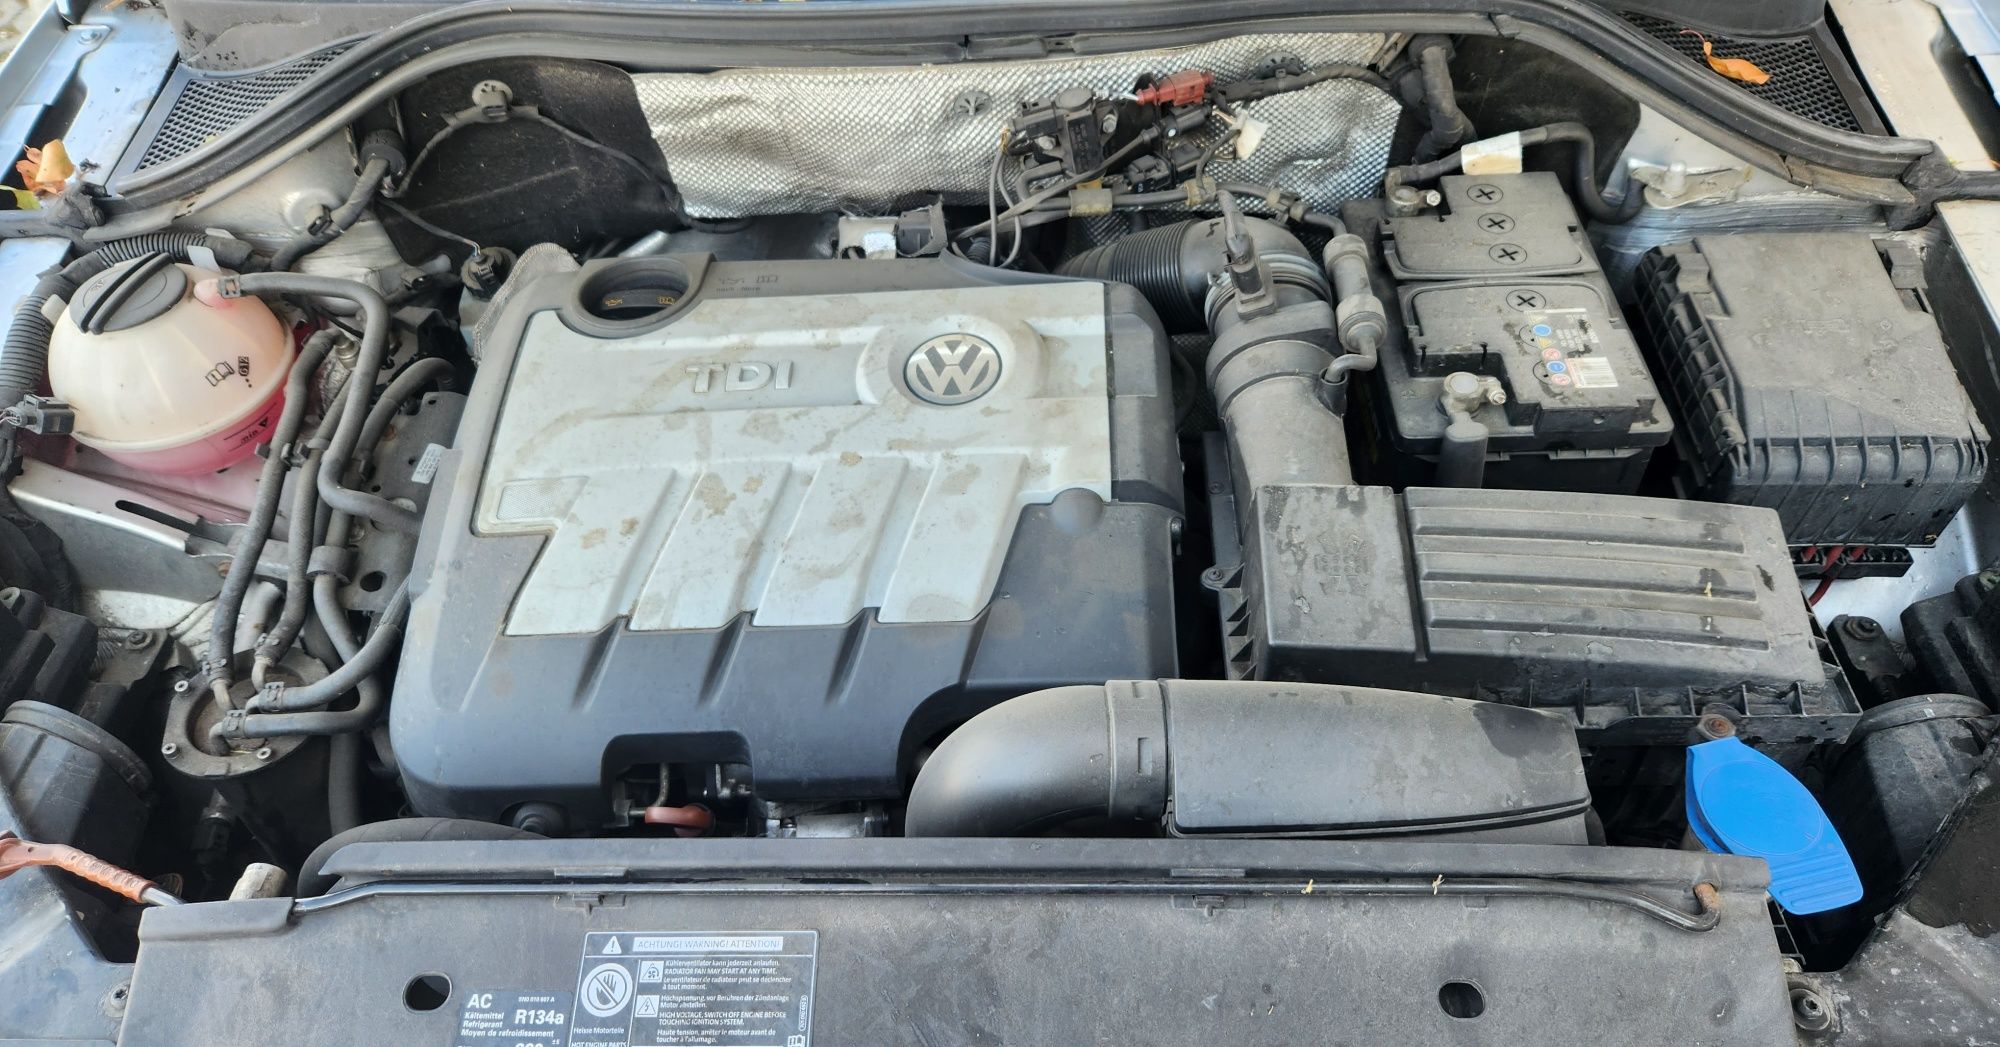 Motor 1.6 tdi CXXB , 110.000 km Volkswagen, passat golf 7 skoda audi